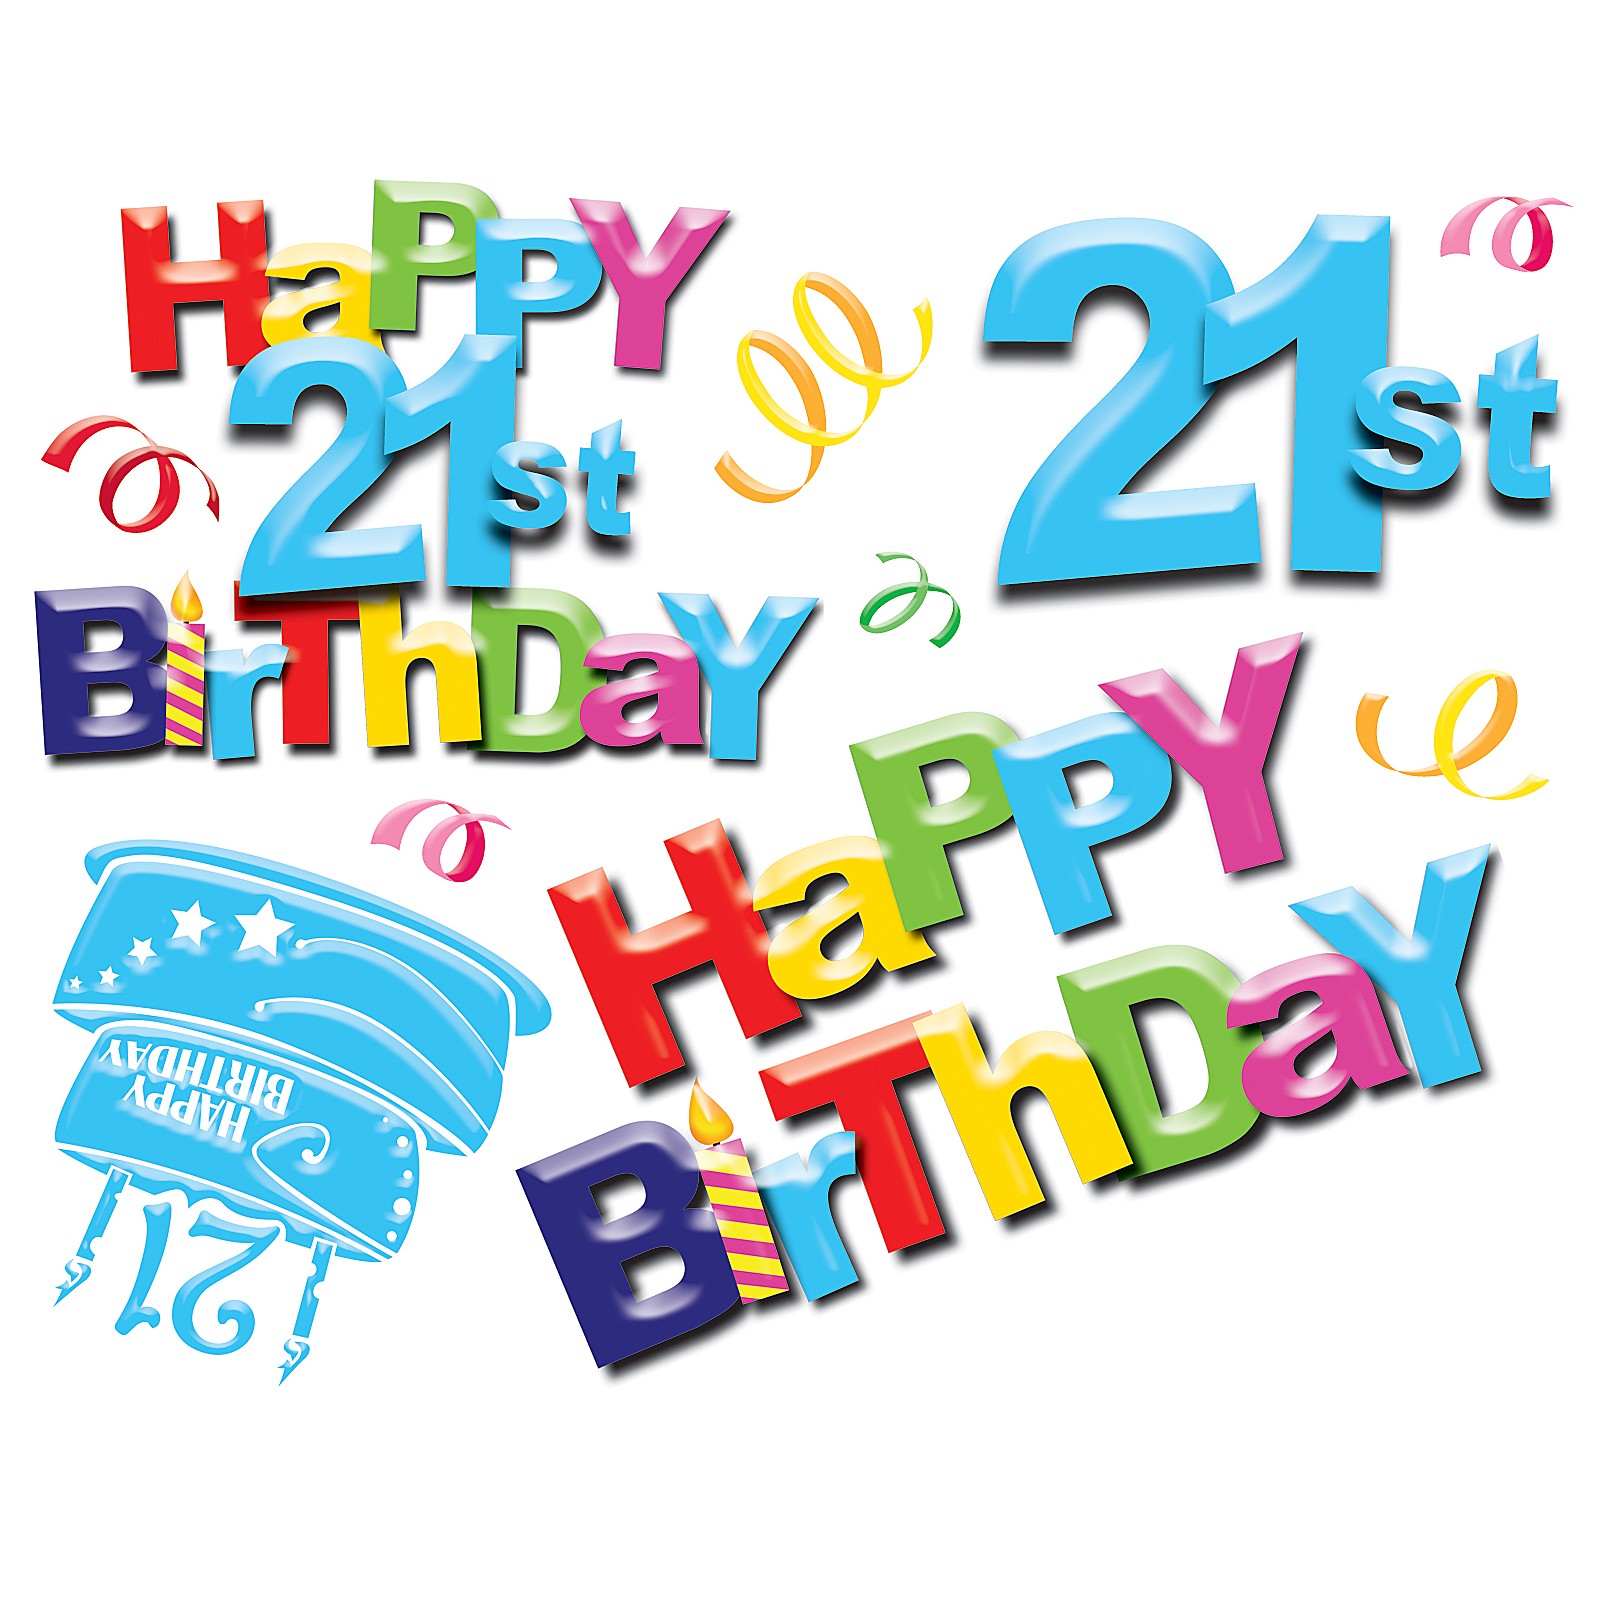 21st-Birthday-7-3.jpg